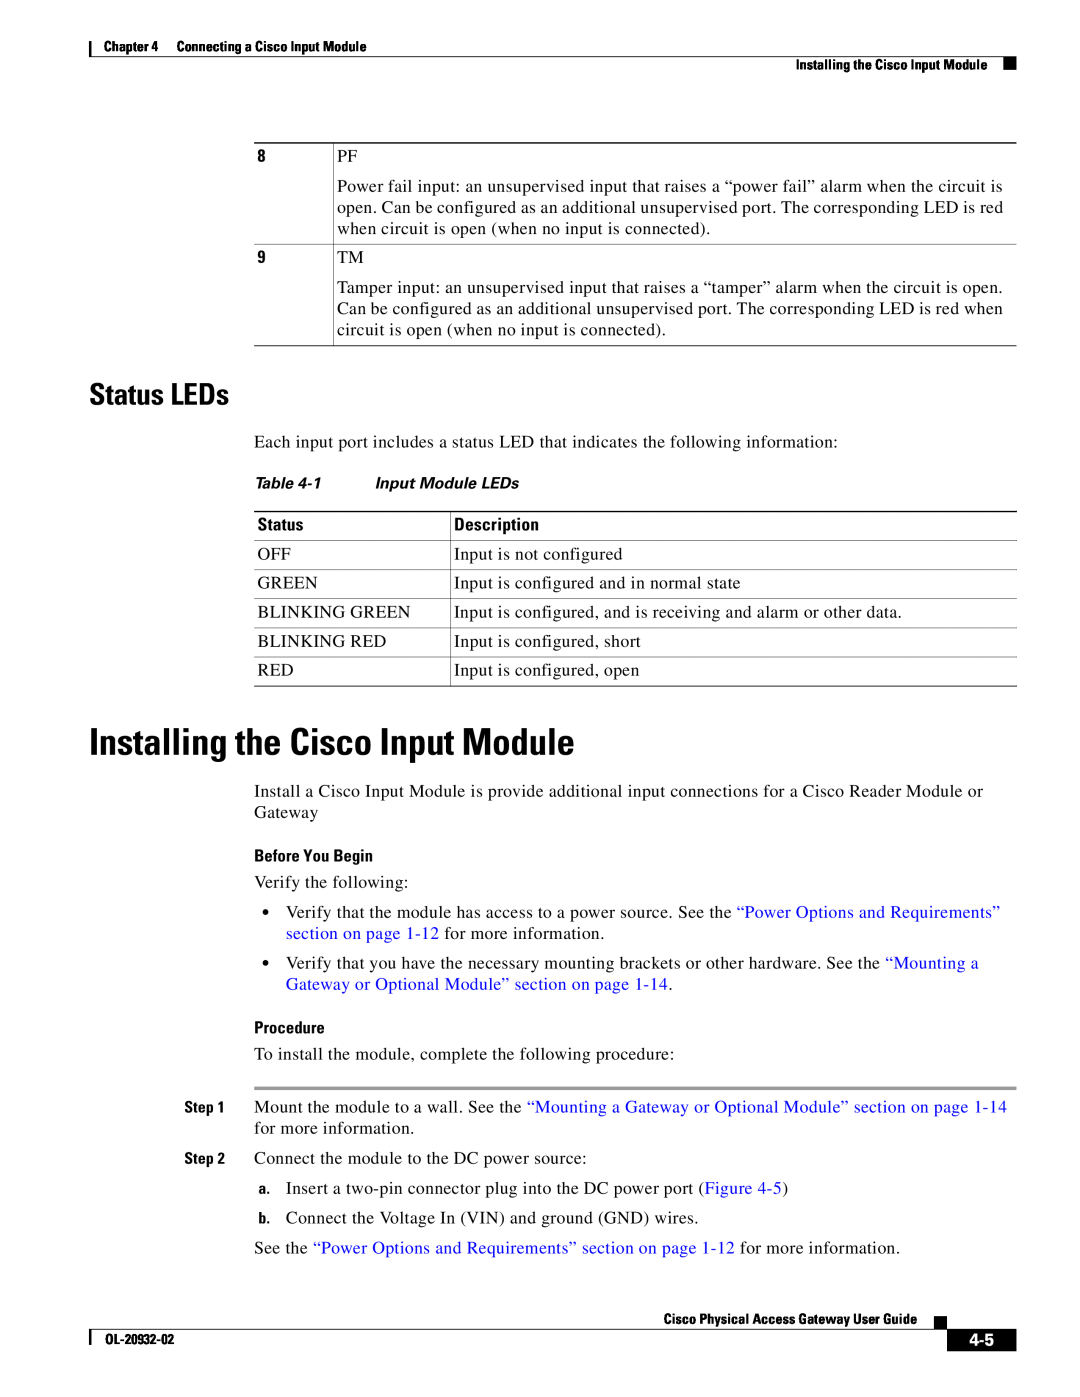 Cisco Systems OL-20932-02 manual Installing the Cisco Input Module, Status LEDs, Input Module LEDs 